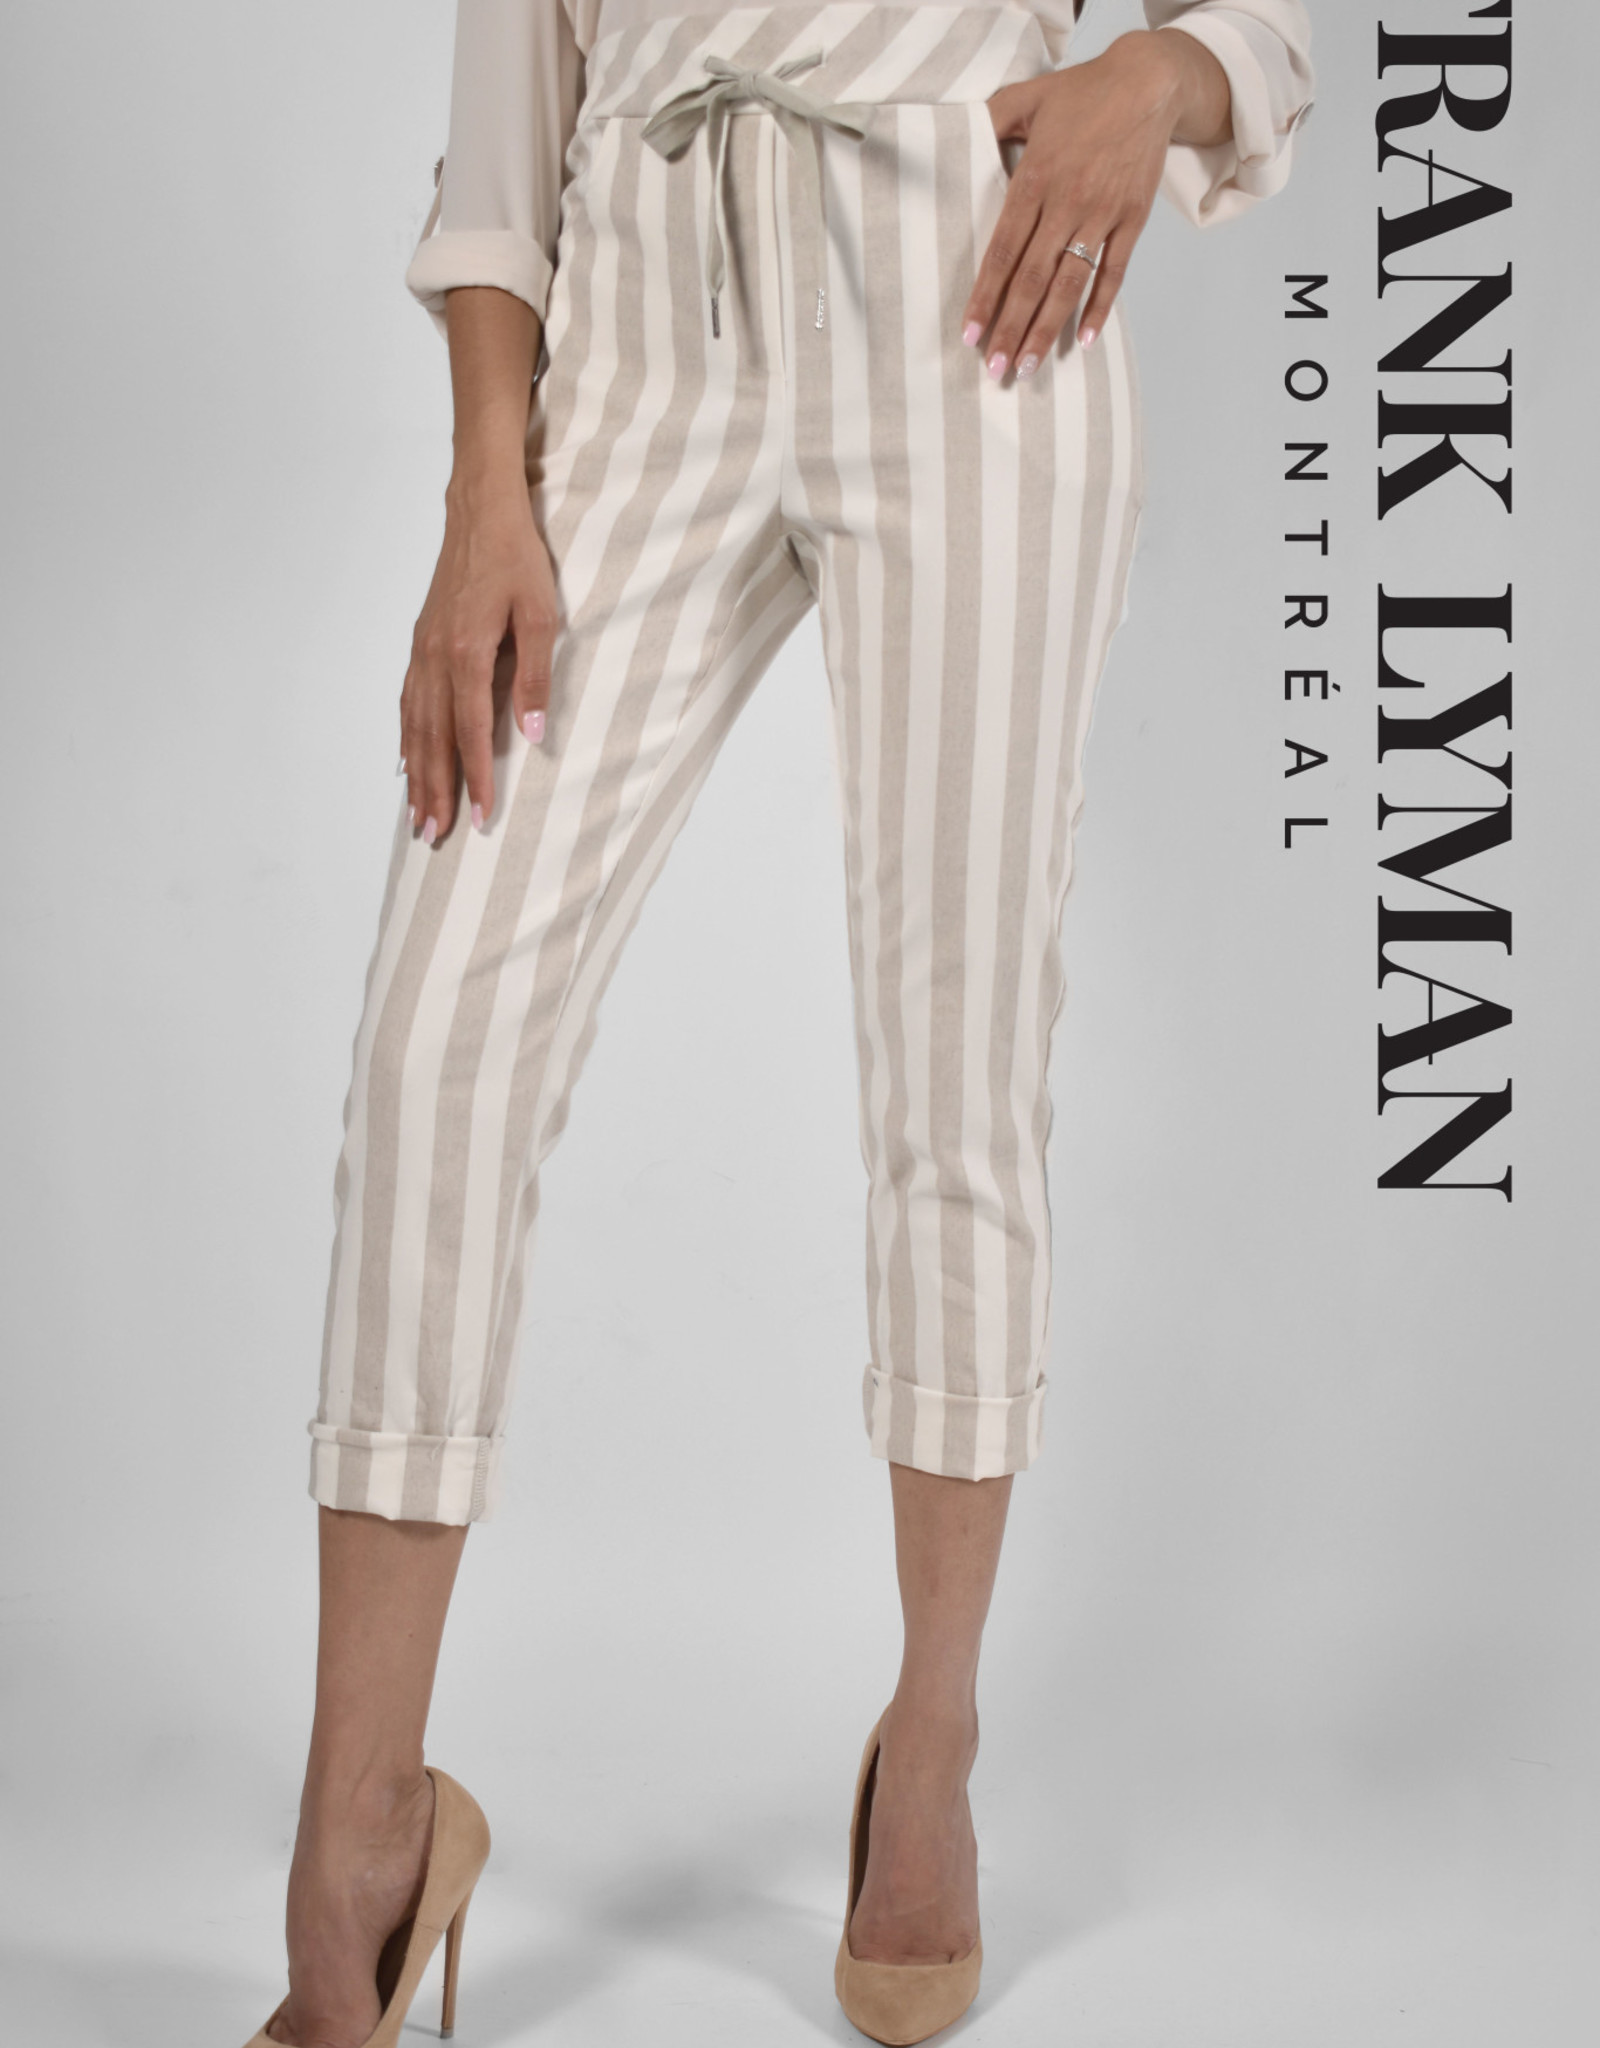 Frank Lyman Frank Lyman Beige/Cream Striped Pant 226547